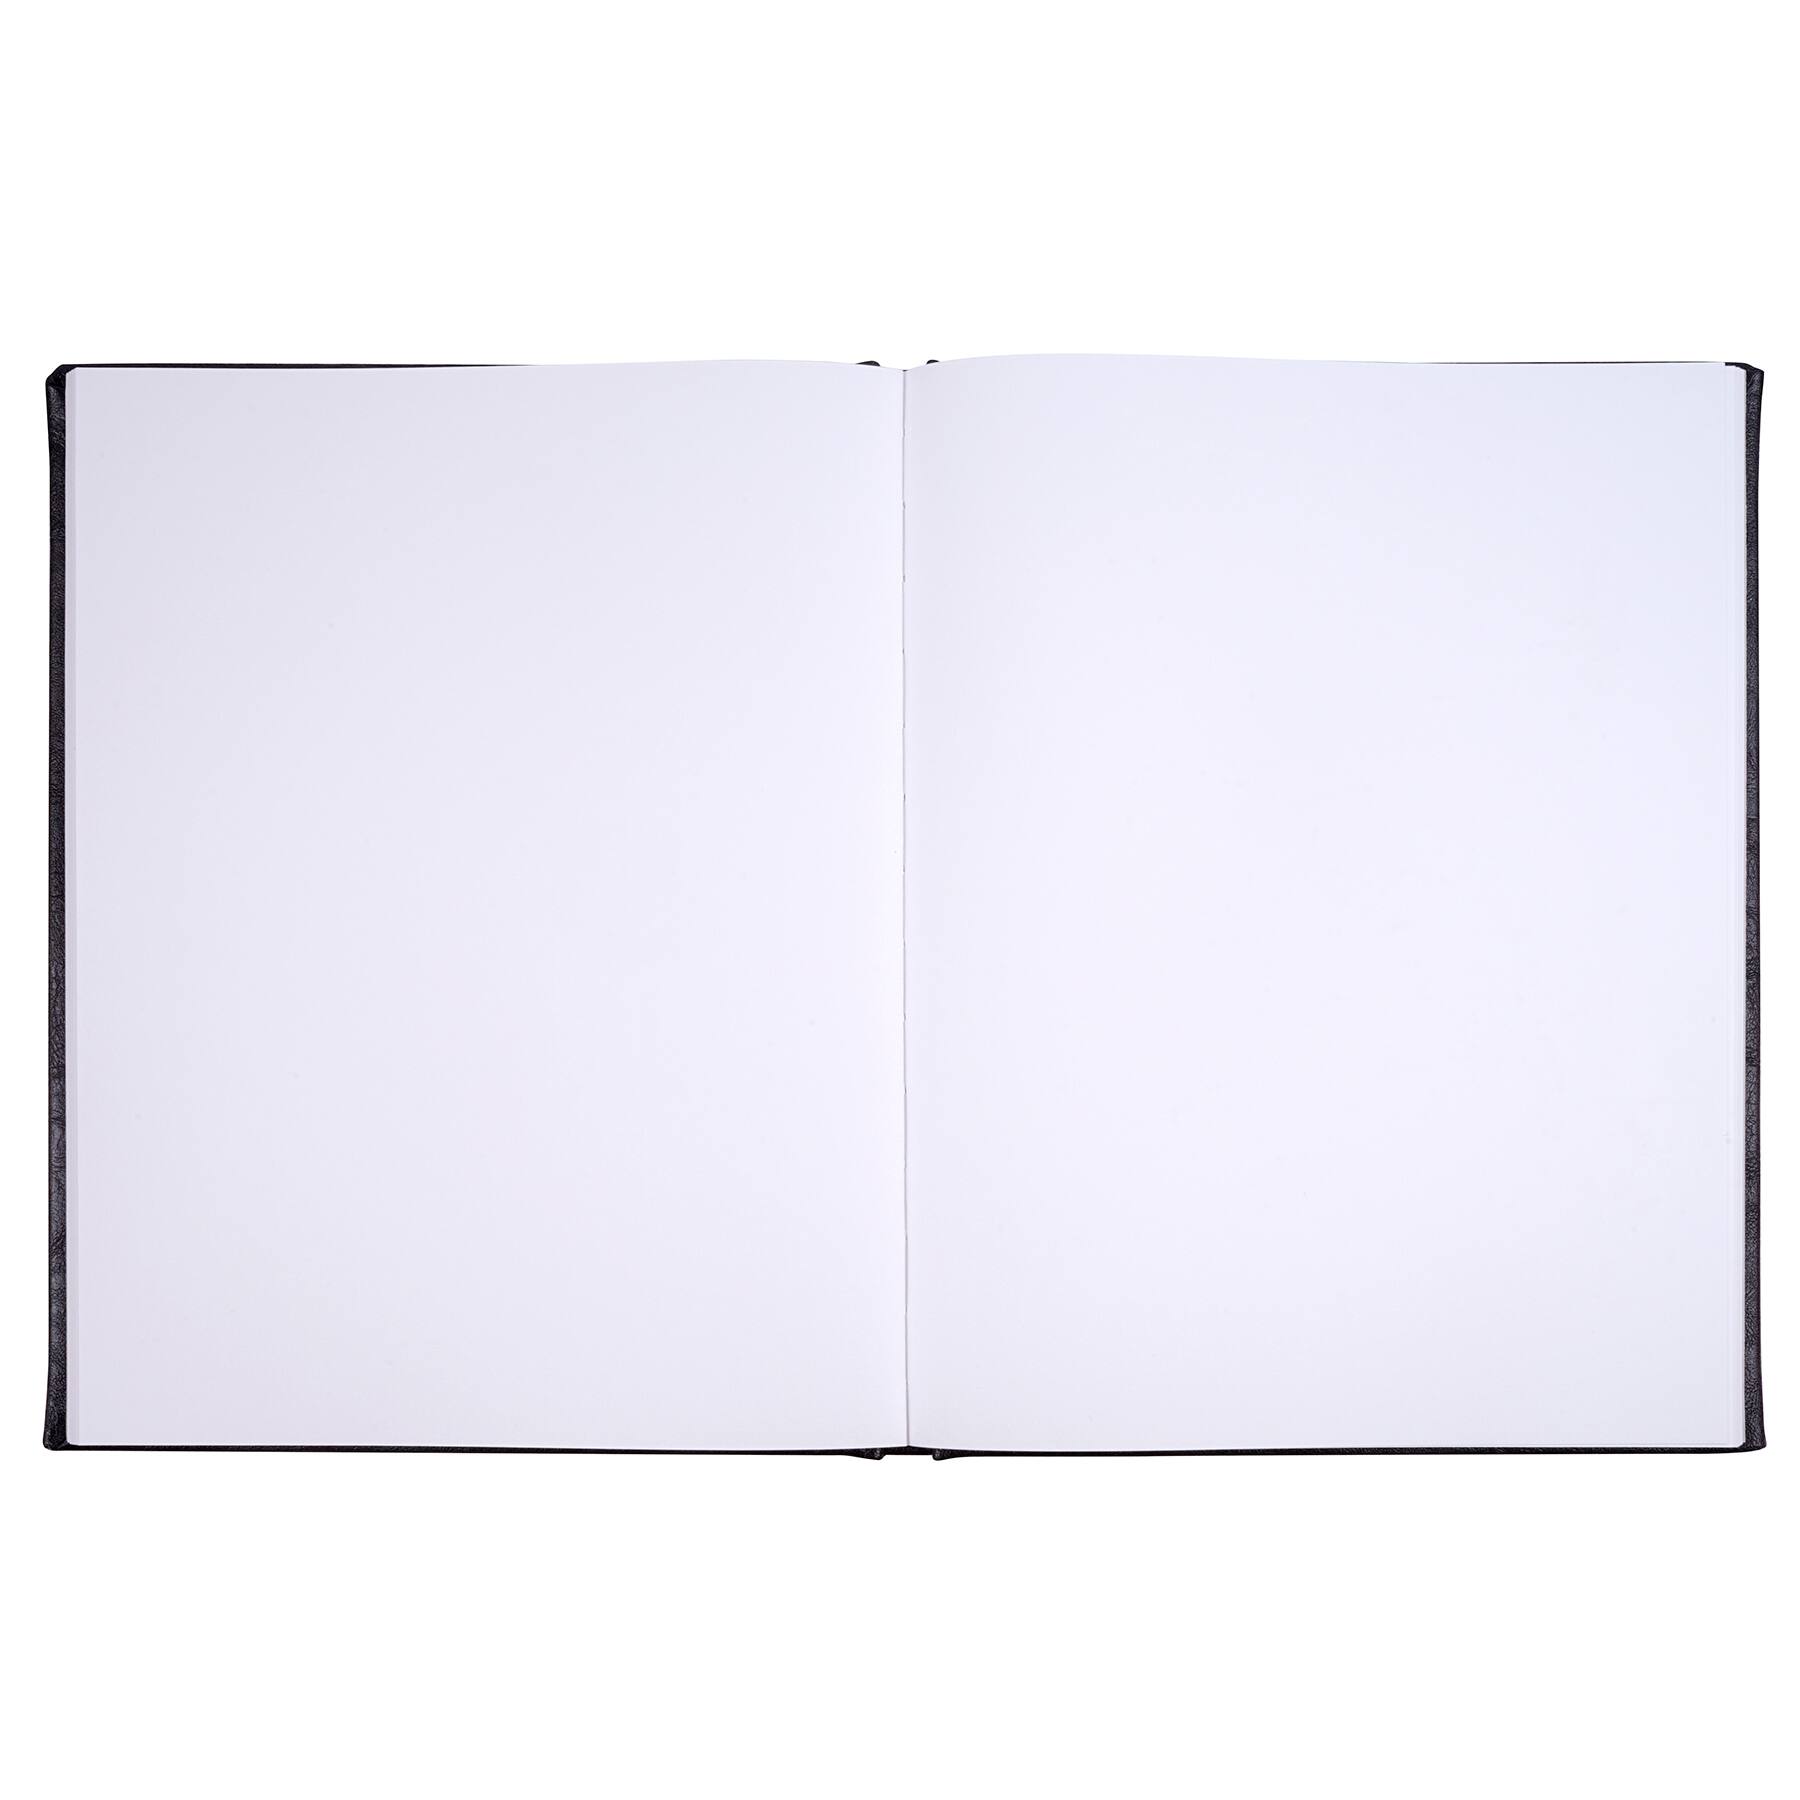 Texture Hardcover Sketchbook by Artist's Loft™, 8.5 x 11